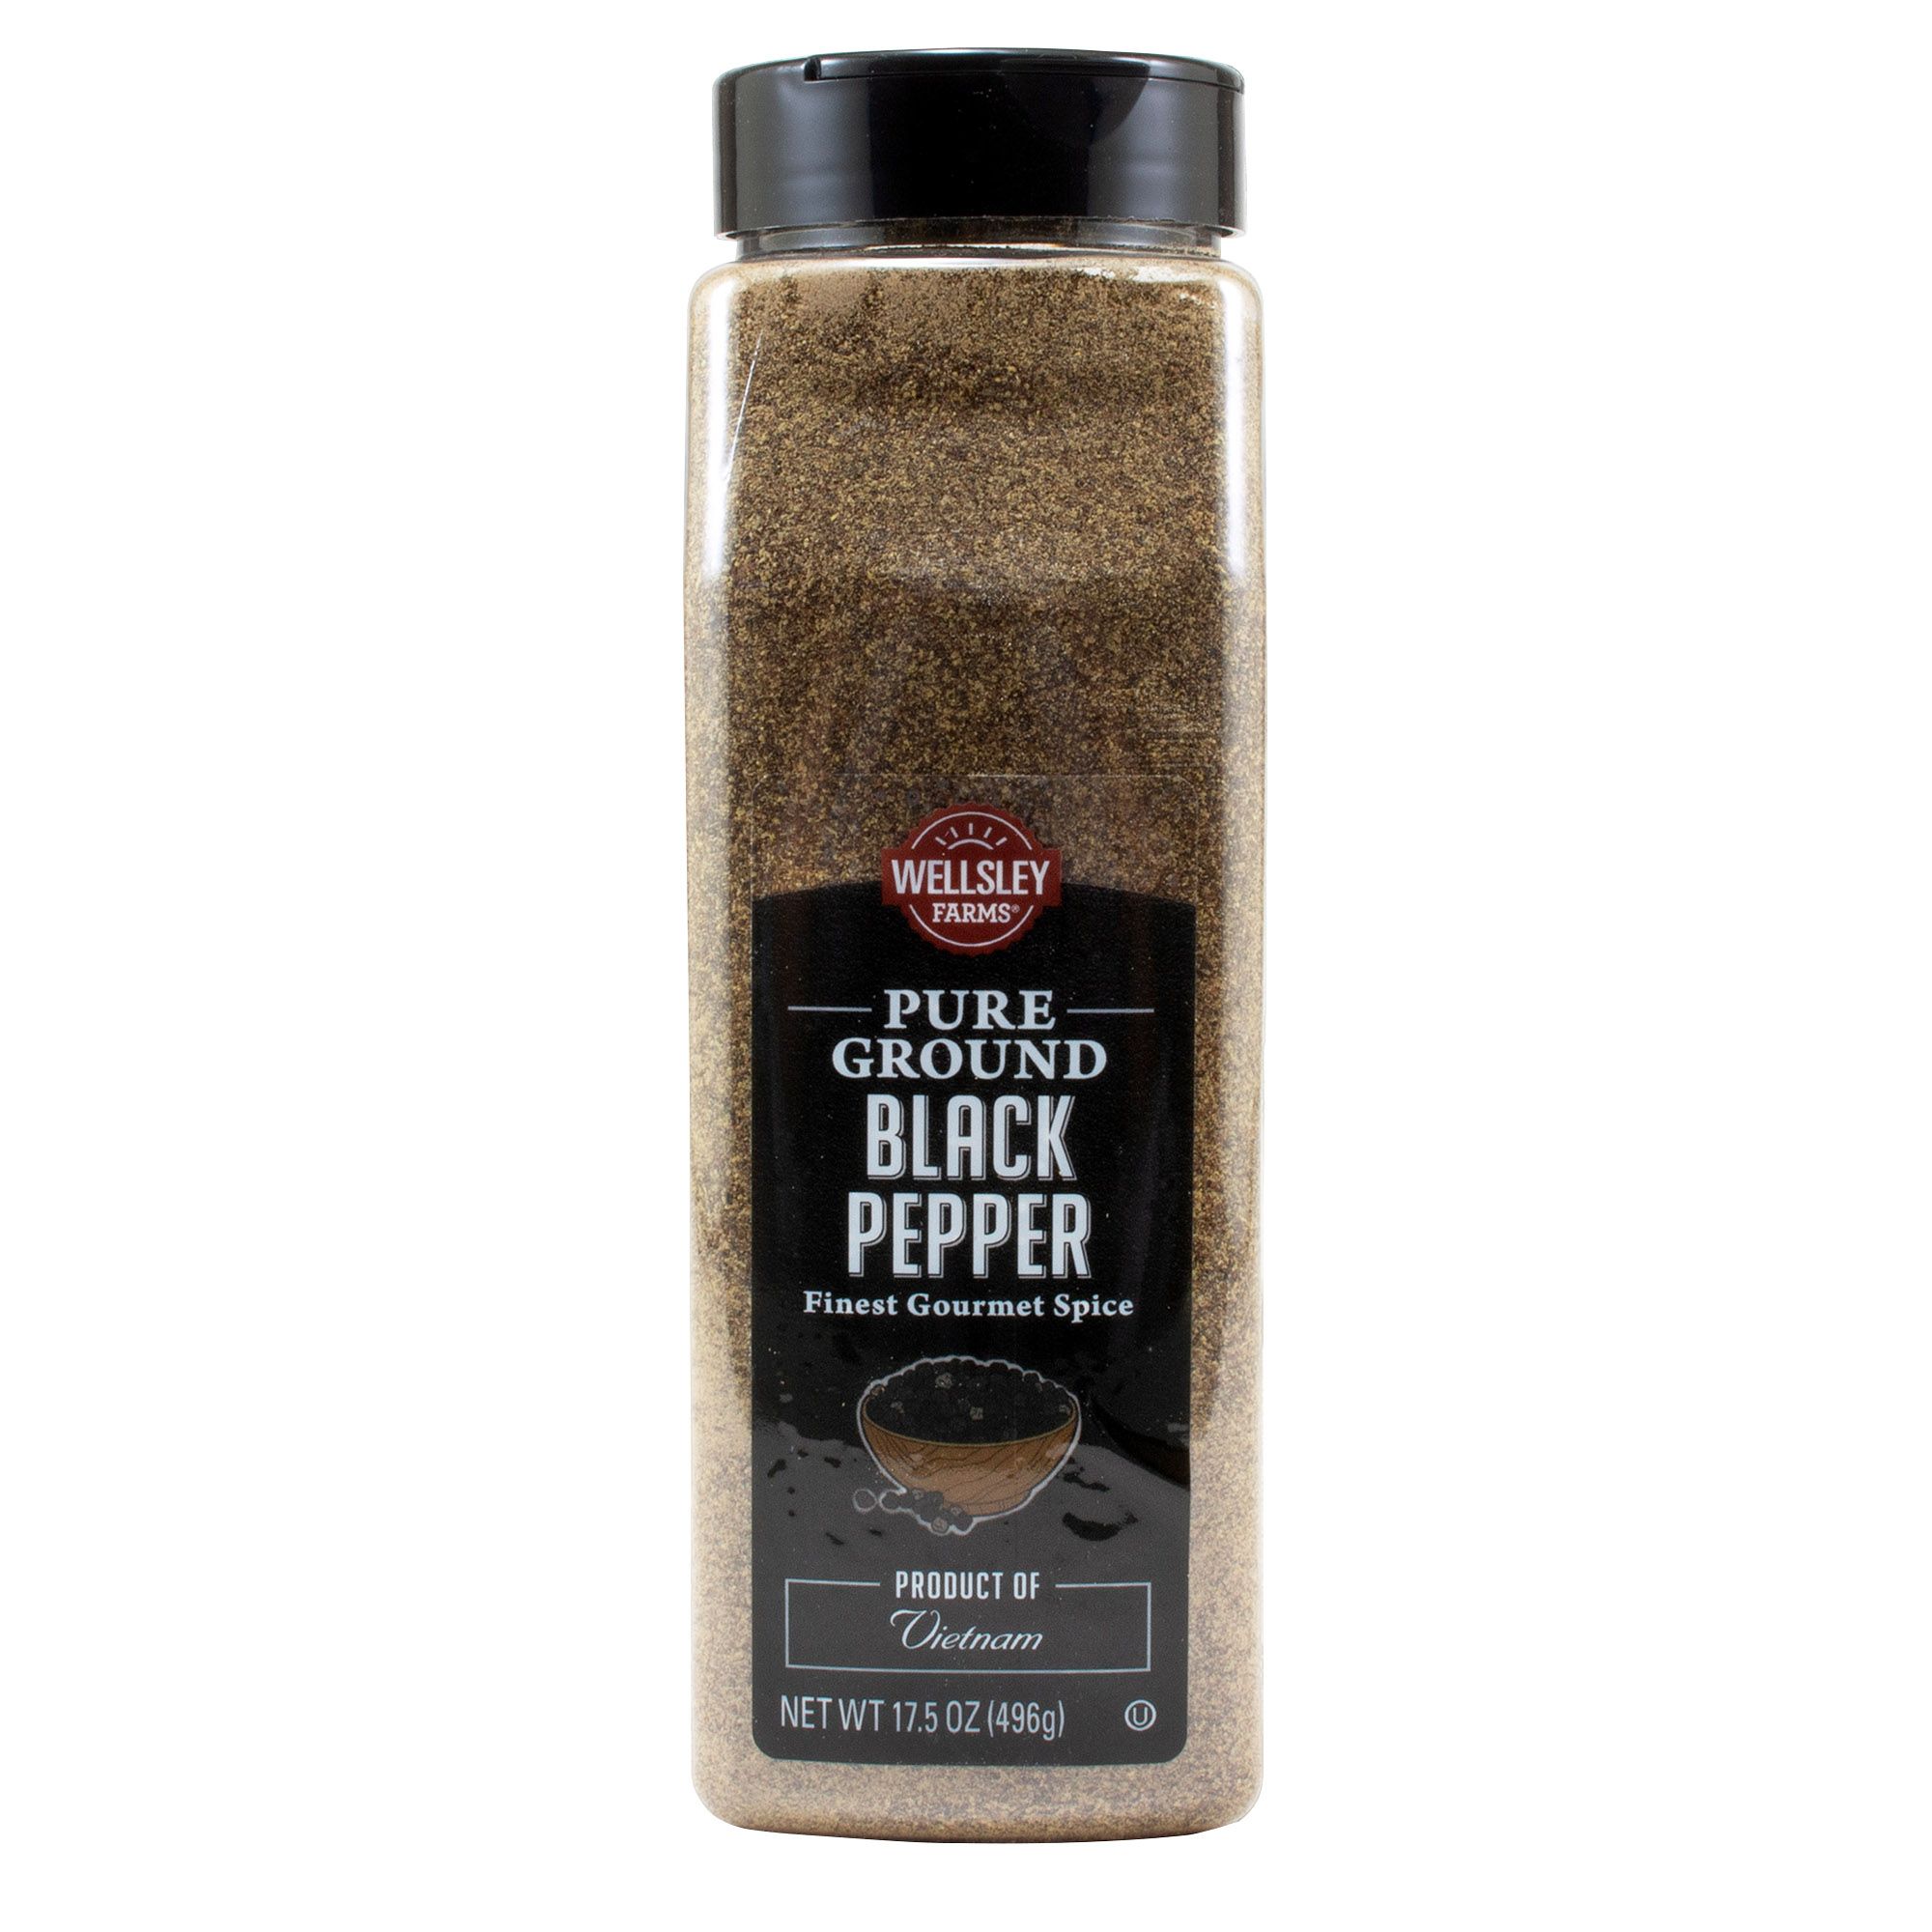 Trader Joe's Black Pepper Peppercorns (w/ Grinder) – We'll Get The